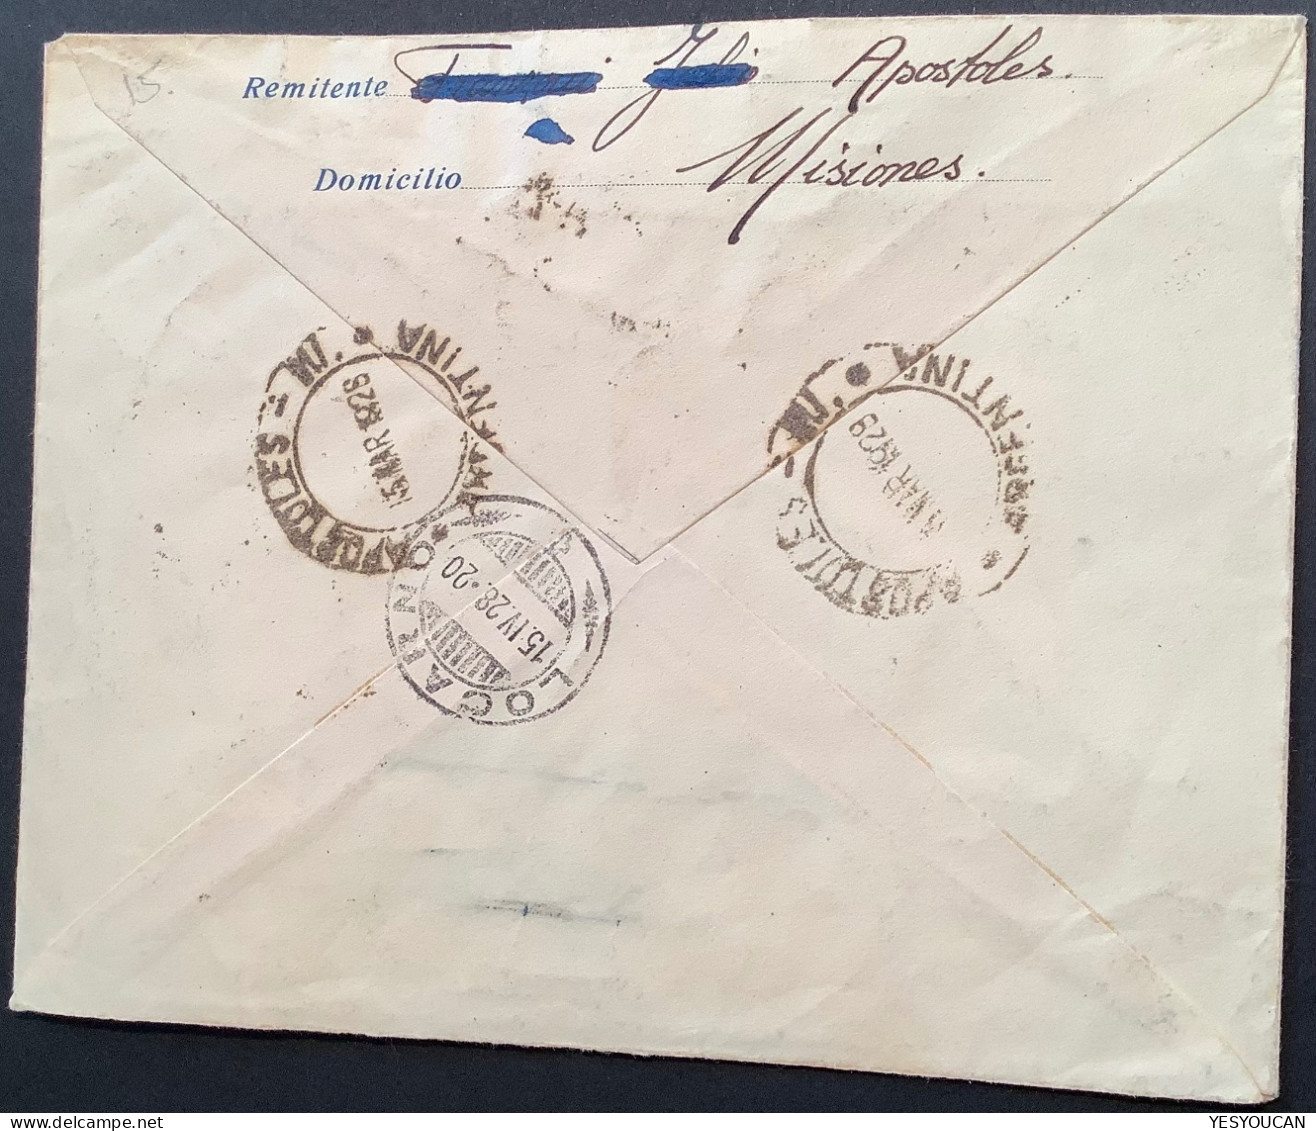 APOSTOLES MISIONES 1928 (Posadas) Cds On Via Aerea 12c Postal Stationery Enveloppe>Locarno (Argentina Air Mail Cover - Entiers Postaux